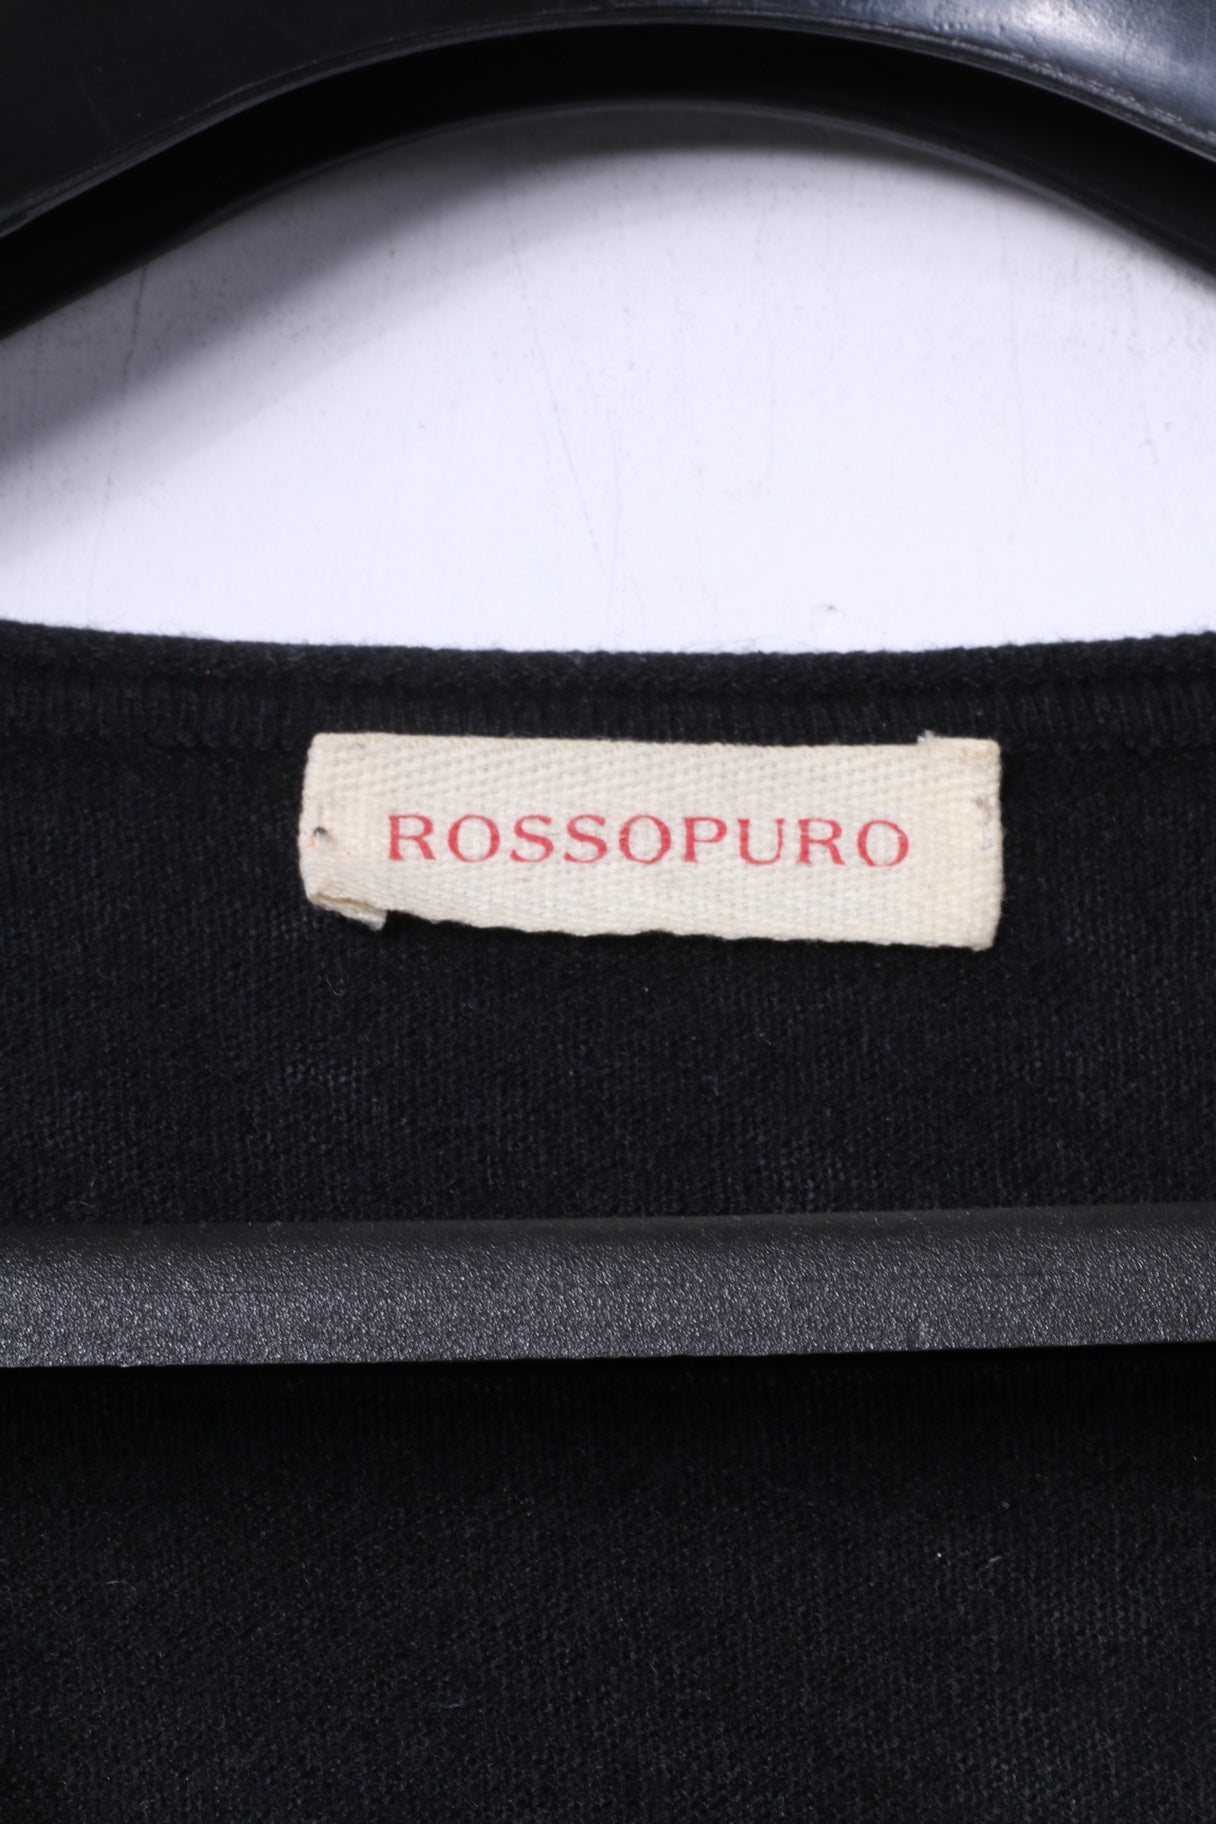 Rossopuro Womens S Jumper Black Classic V Neck Soft Sweater Light Top